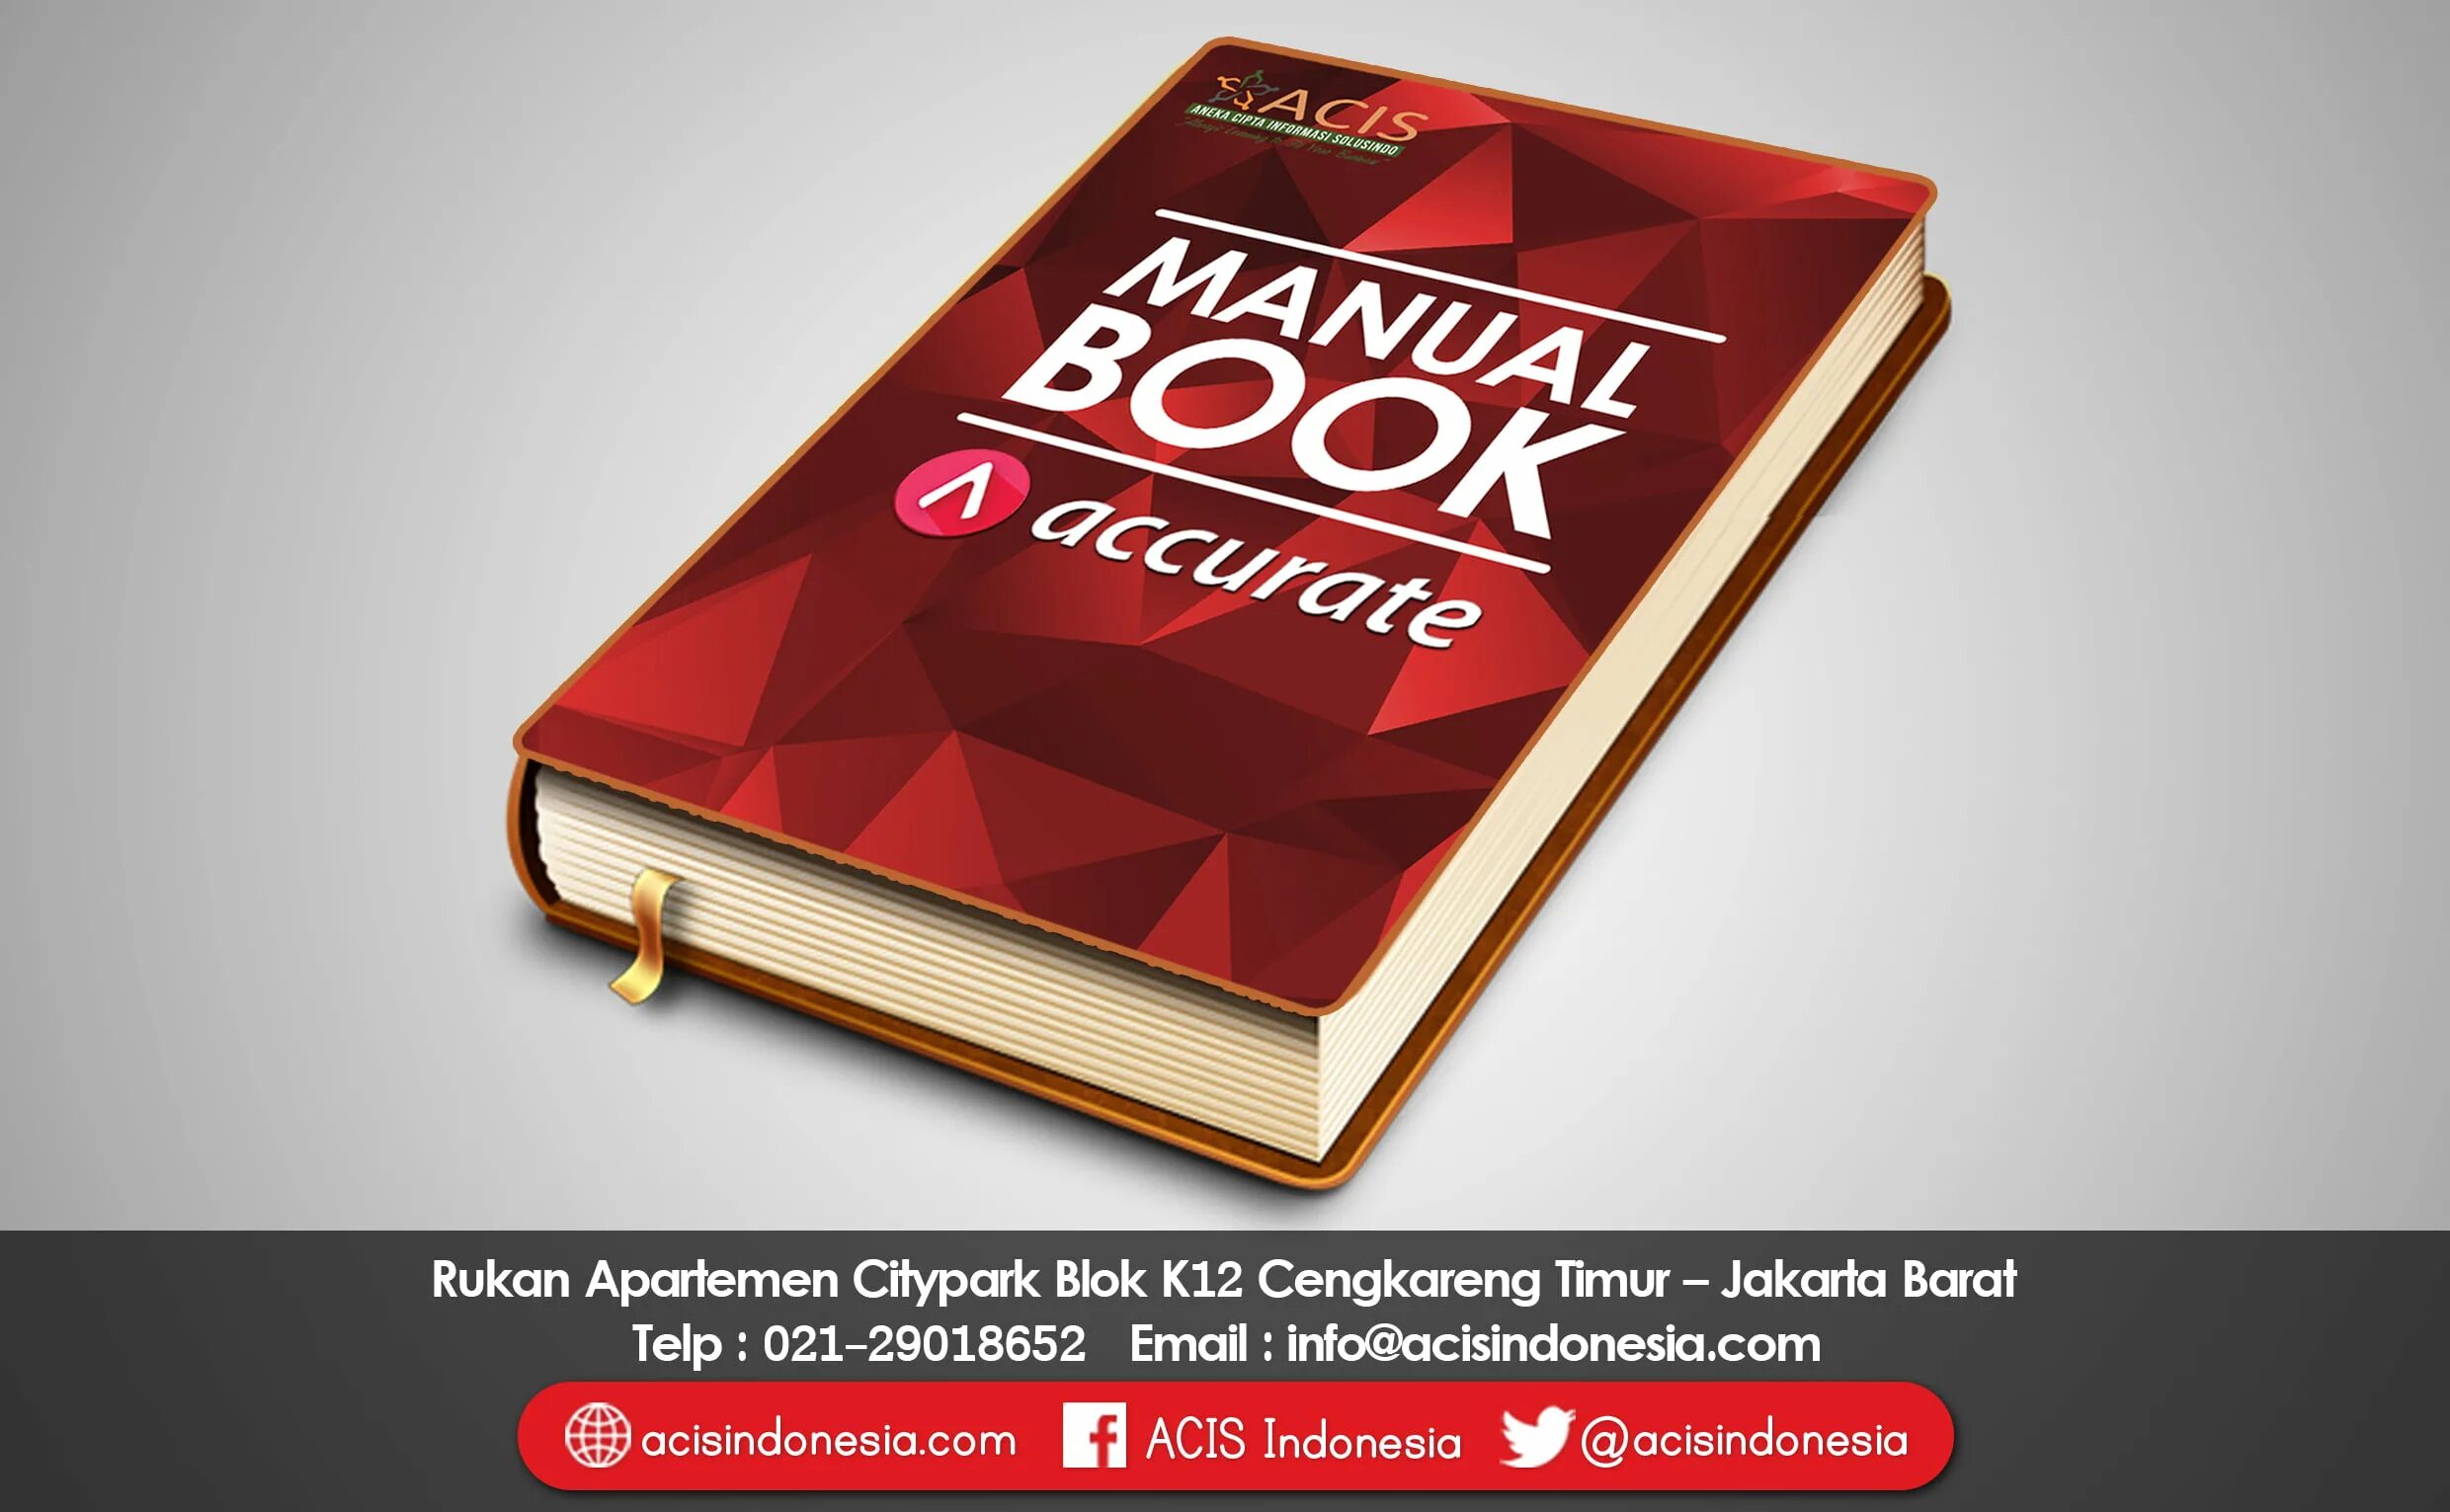 Accounting book. Manual. Manual book. Manual книга картинка. Account book.